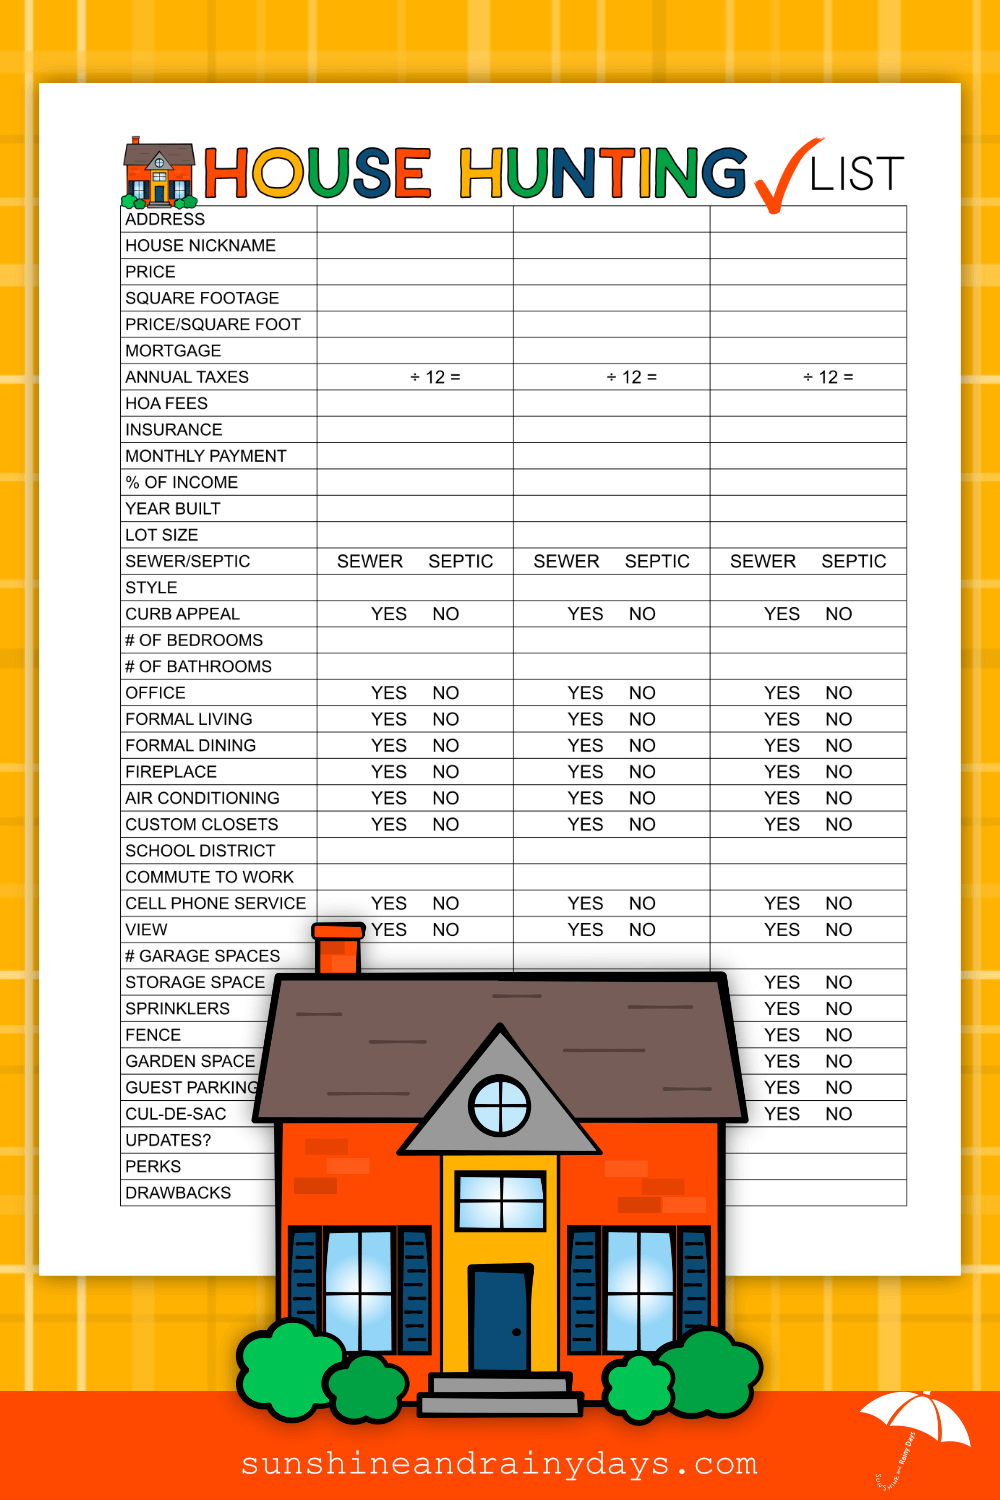 House Hunting Checklist - Sunshine and Rainy Days Regarding House Hunting Checklist Template Regarding House Hunting Checklist Template